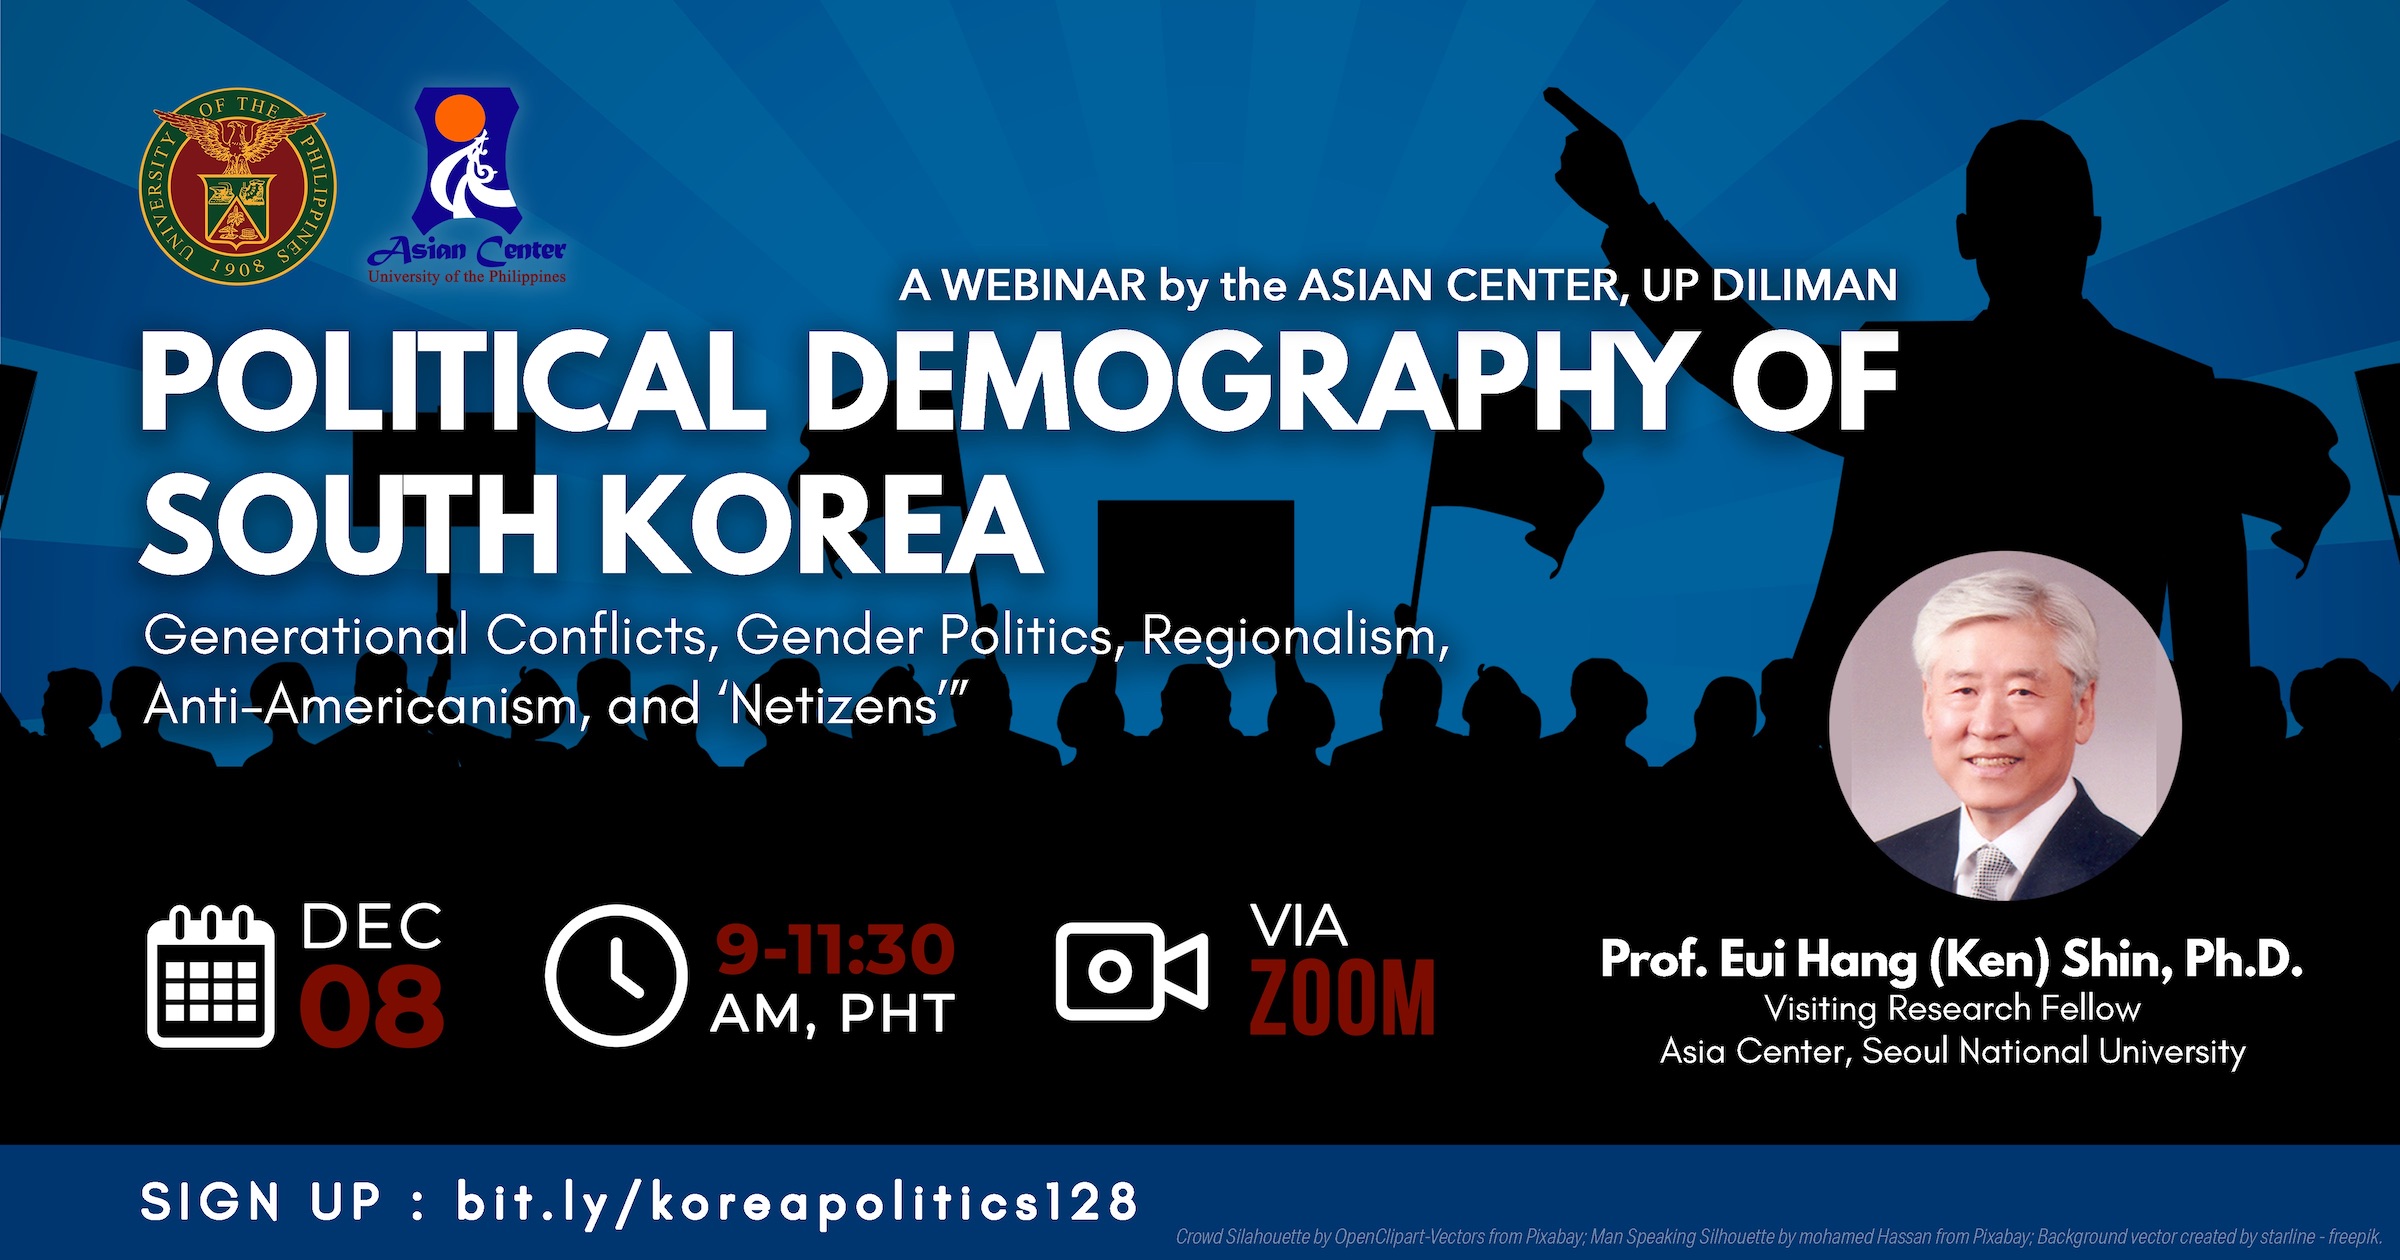 The Political Demography of South Korea: A Webinar